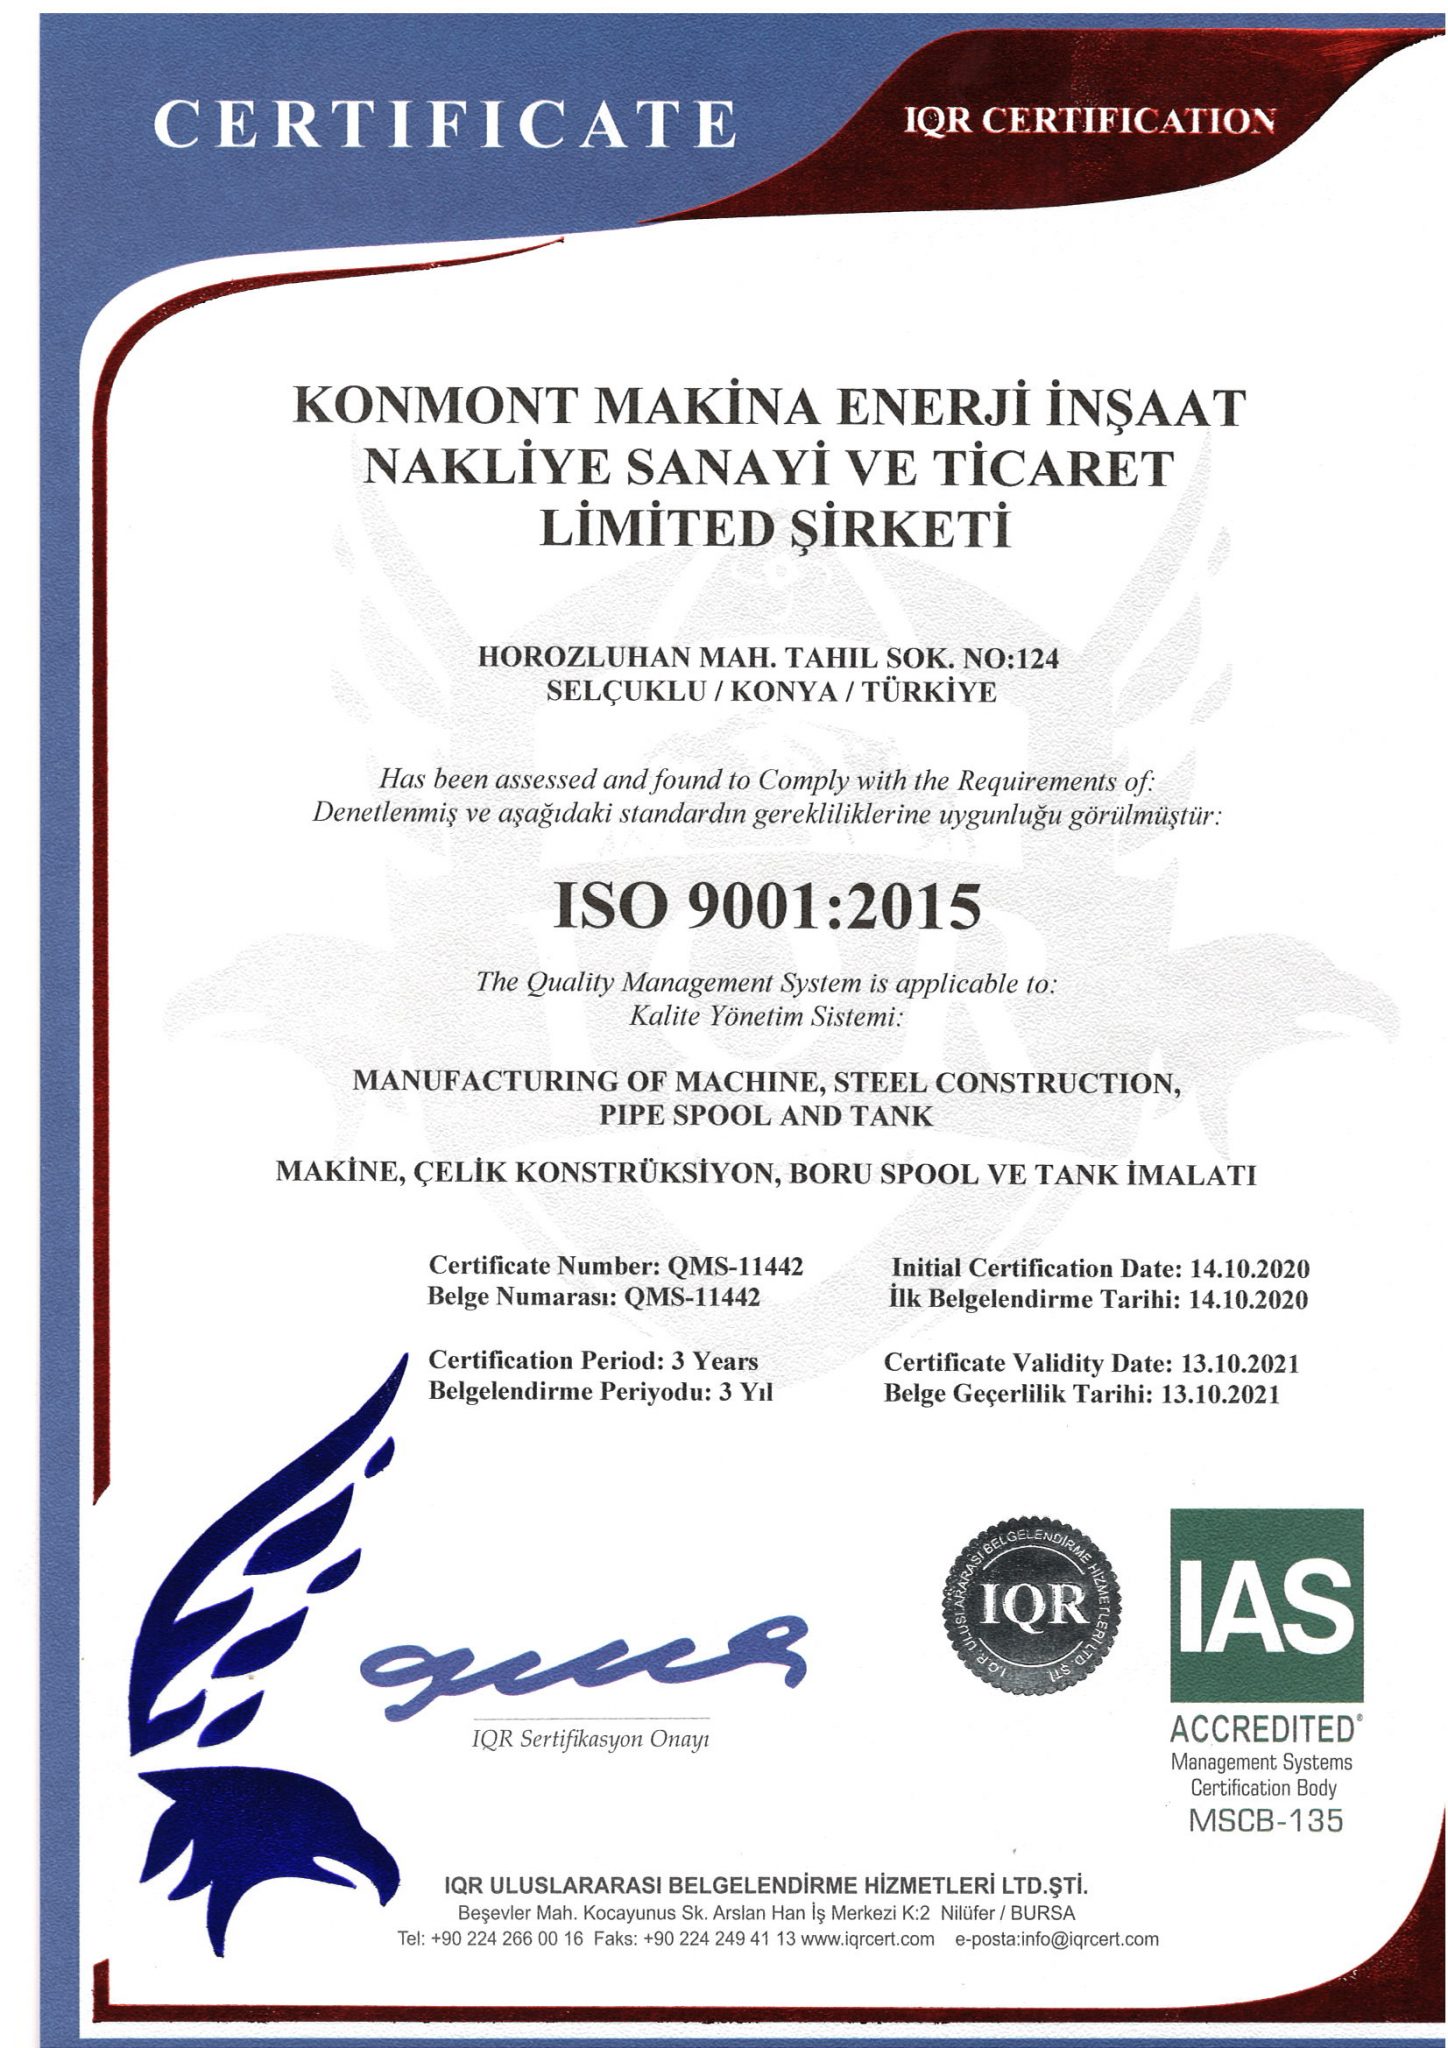 KONMONT ISO 9001